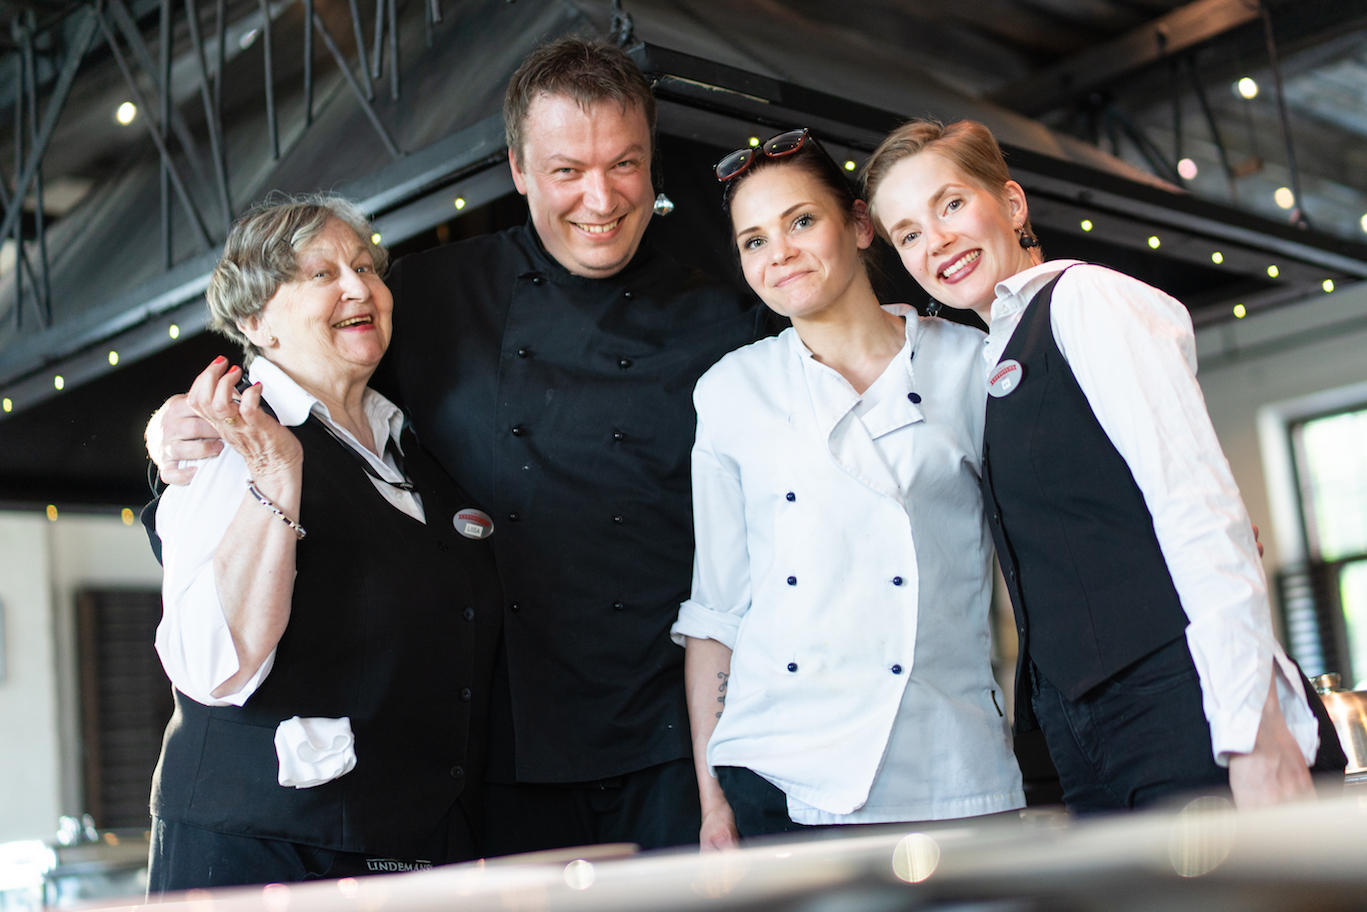 The waiter Liisa, the chef Pasi Venäläinen, the trainee Tiia and the waiter Ruth. (Photo is provided by Sanna.)